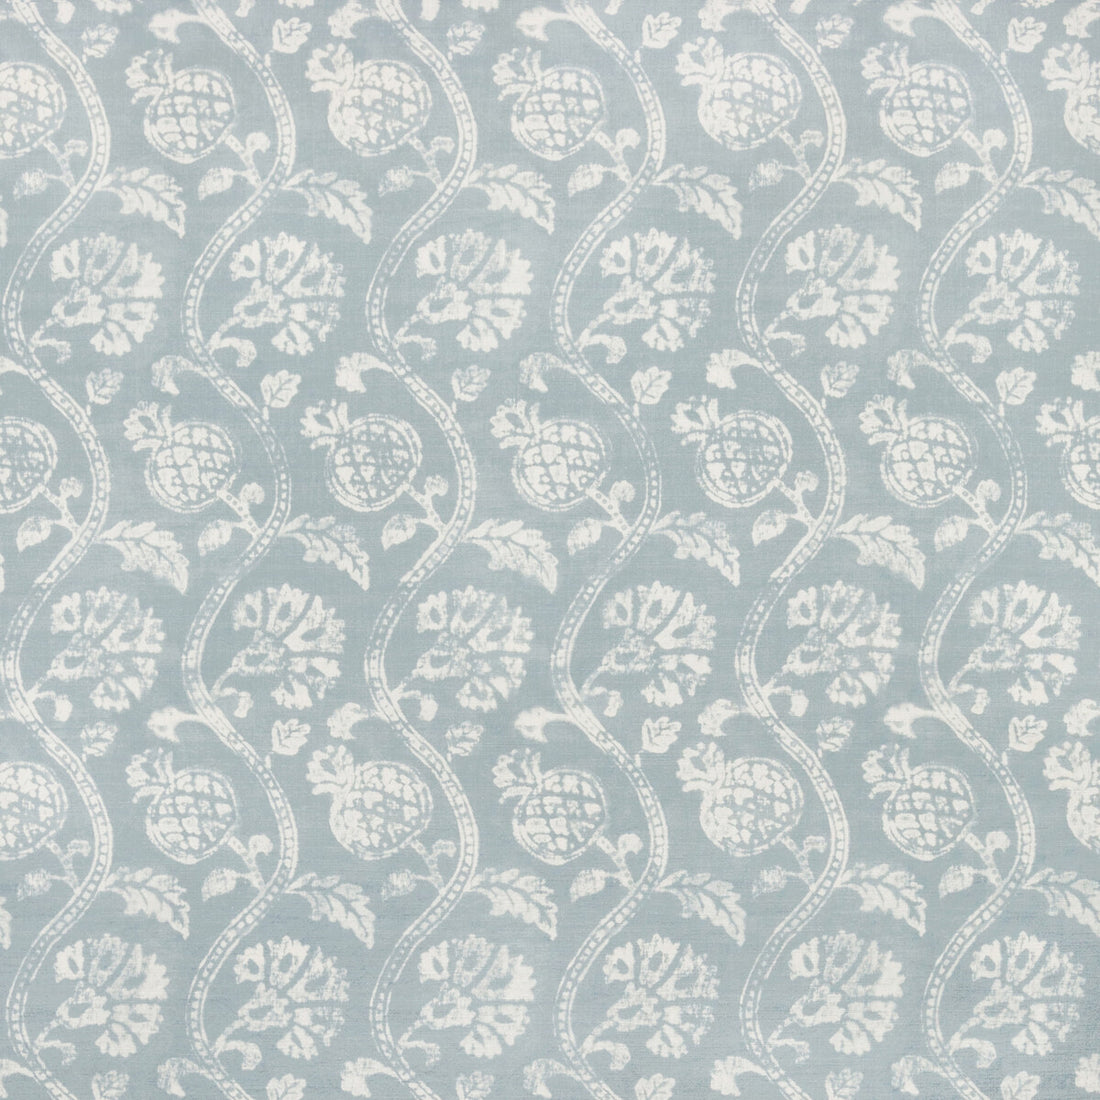 Amballa fabric in horizon color - pattern AMBALLA.511.0 - by Kravet Basics in the Ceylon collection